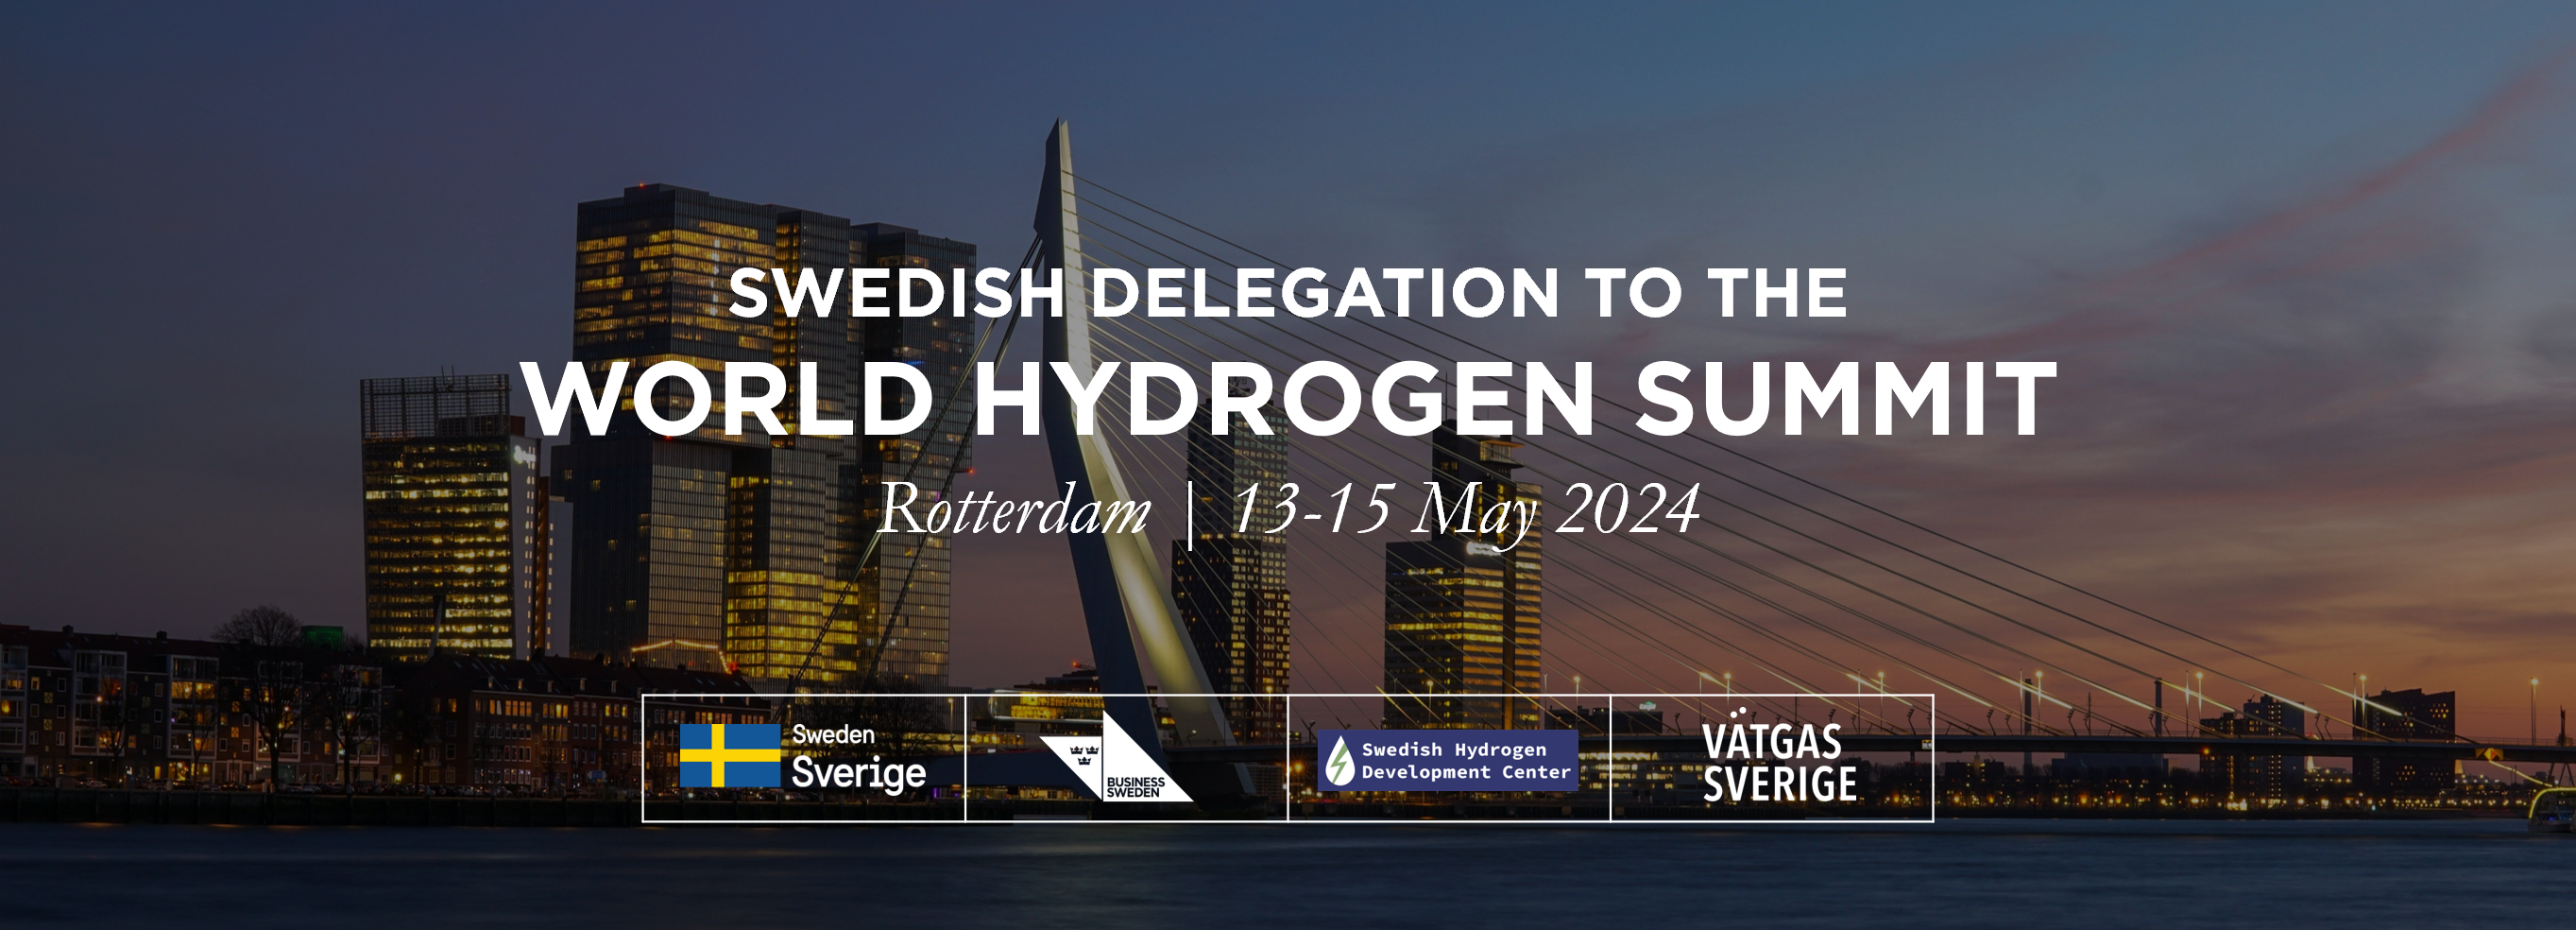 Header image for Swedish Delegation to World Hydrogen Summit in Rotterdam